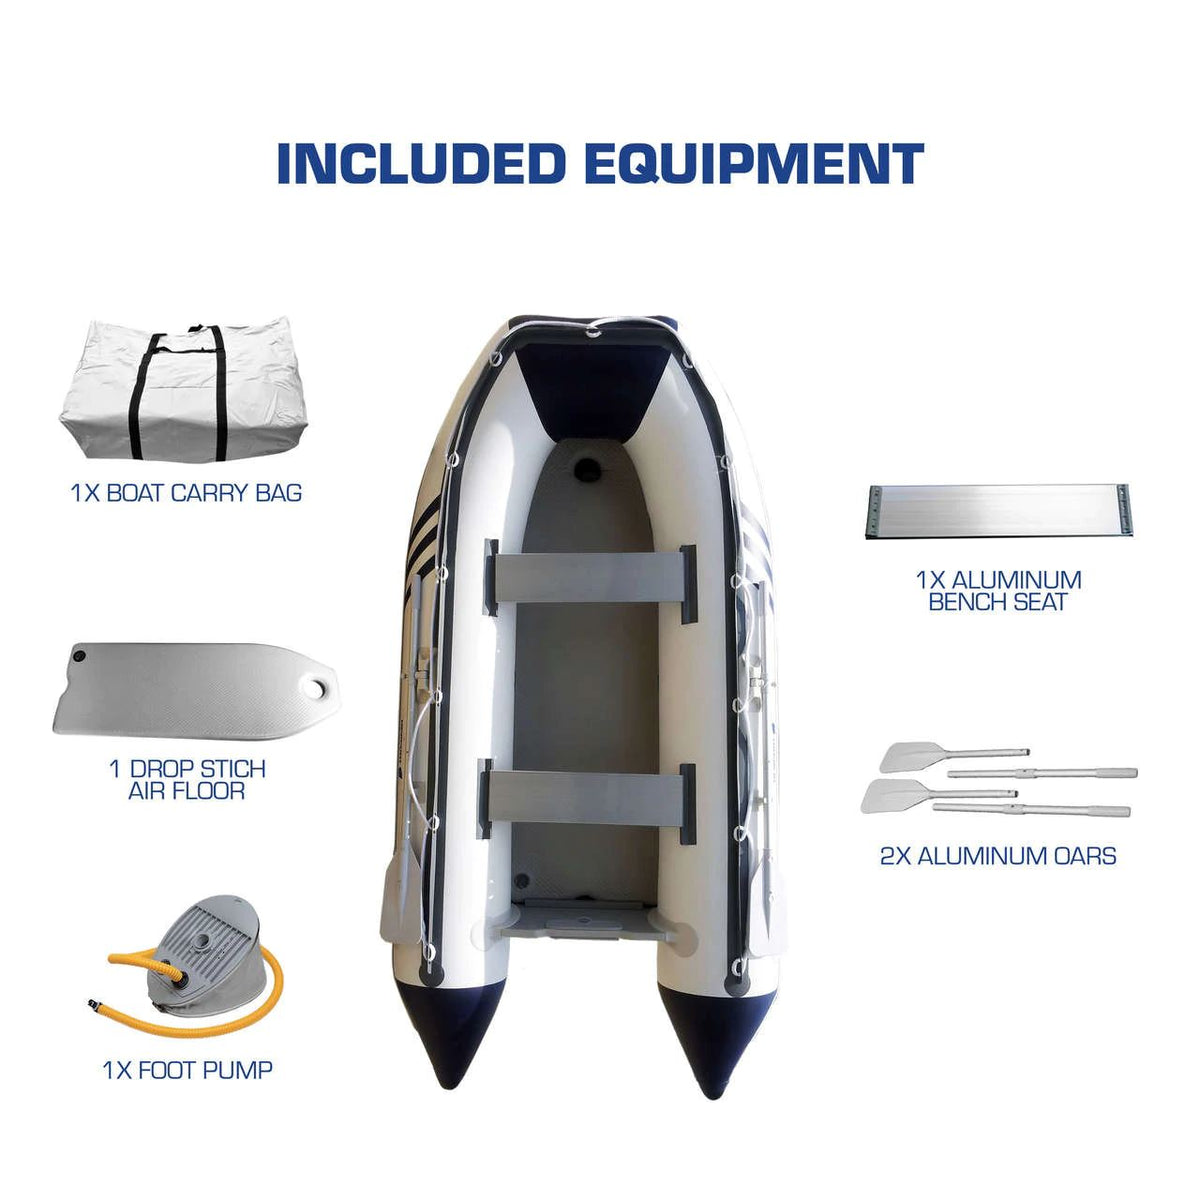 Newport Santa Cruz Inflatable Boat - 10ft Air Floor